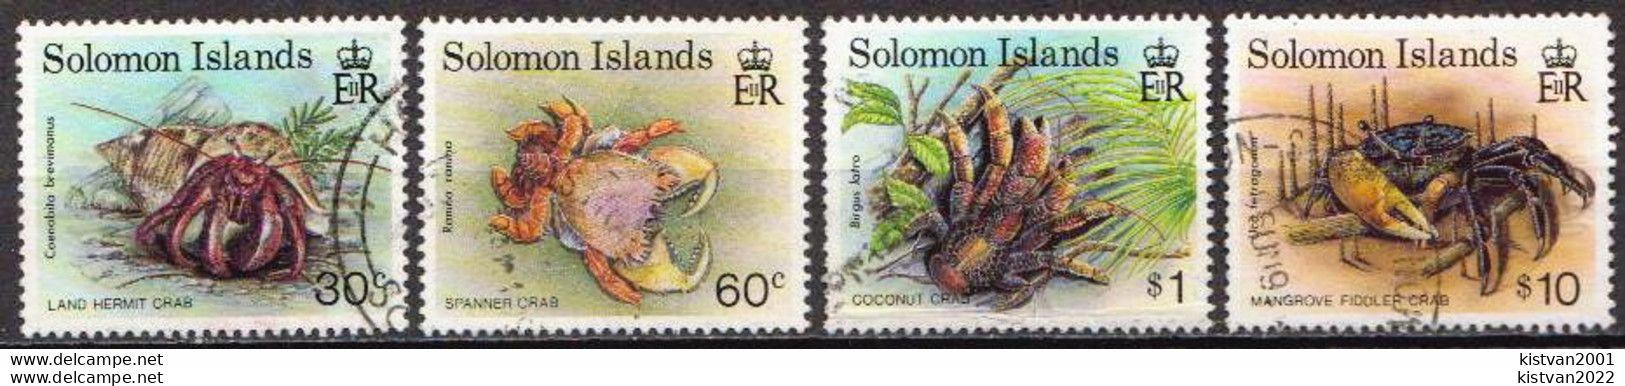 Solomon Used Stamps - Schalentiere